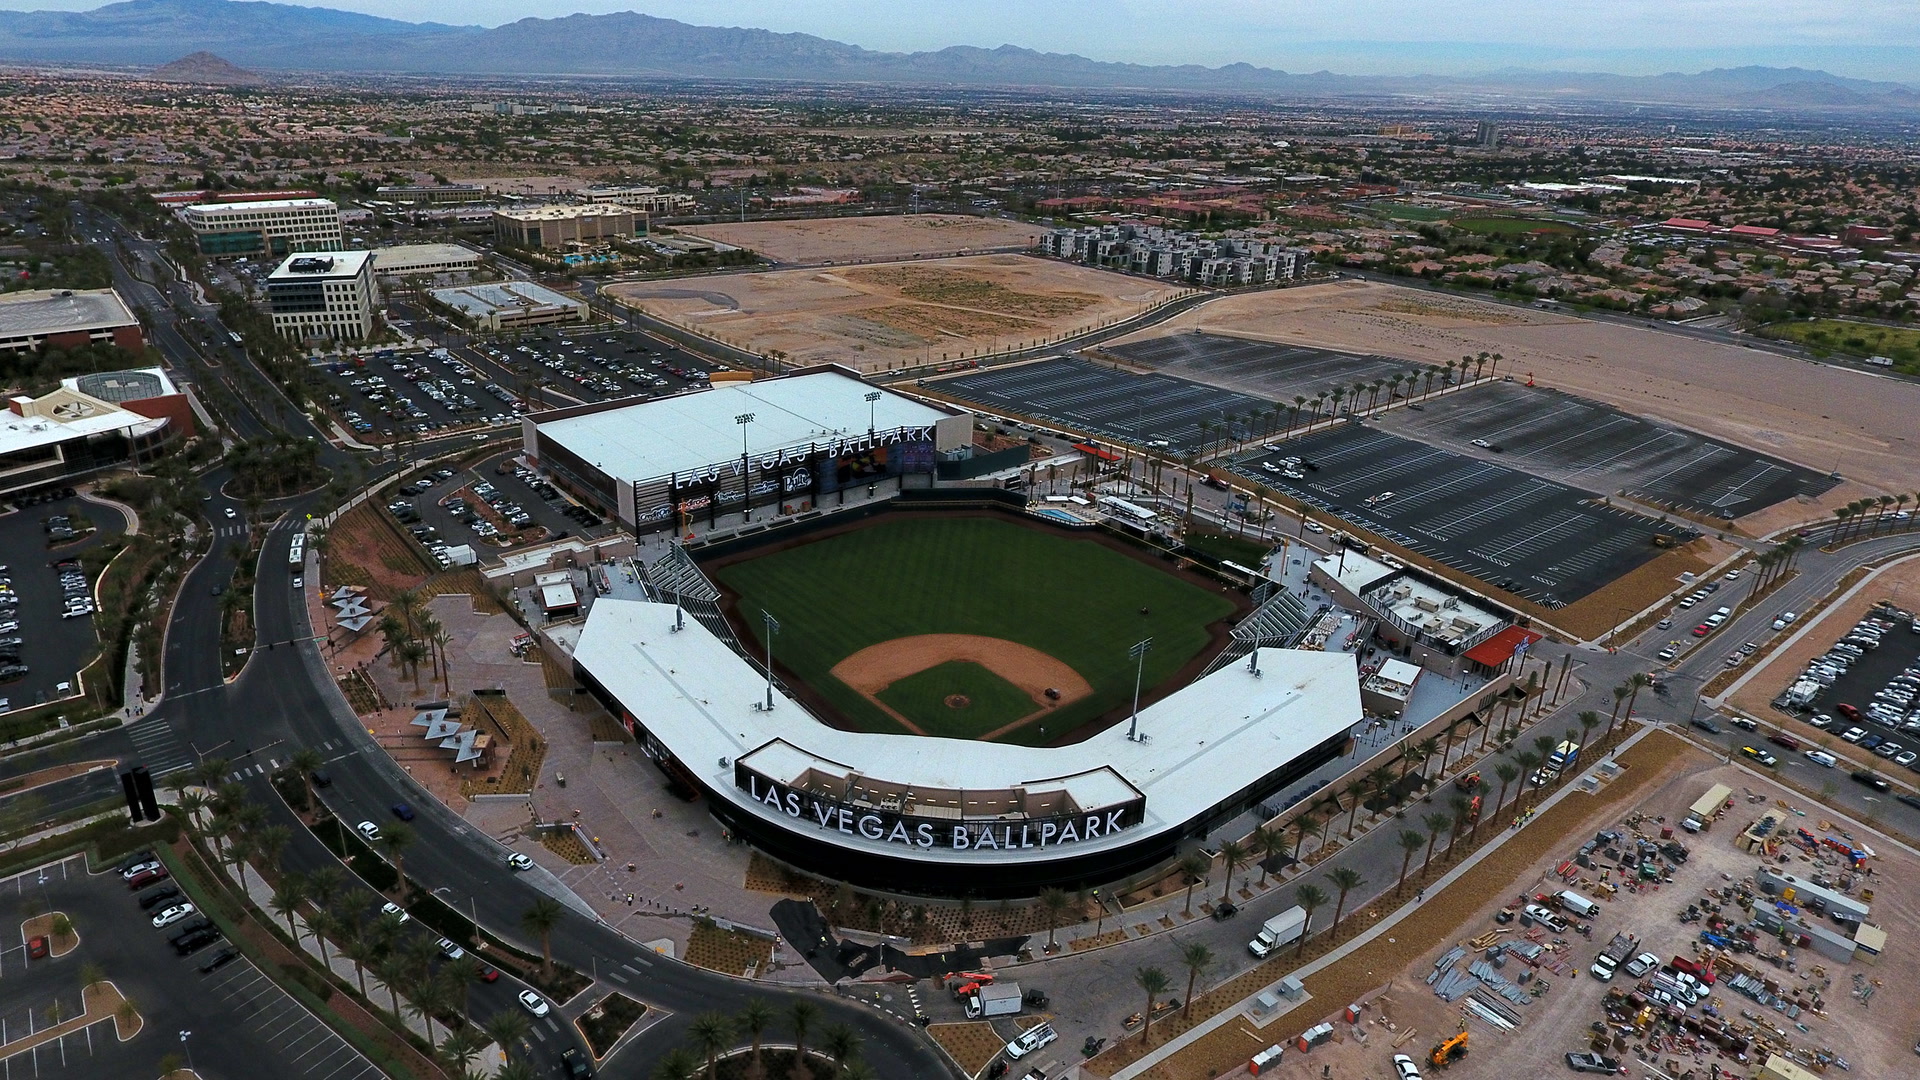 Aviators vow ‘wow’ factor at new Las Vegas Ballpark | Las Vegas Review-Journal1920 x 1080